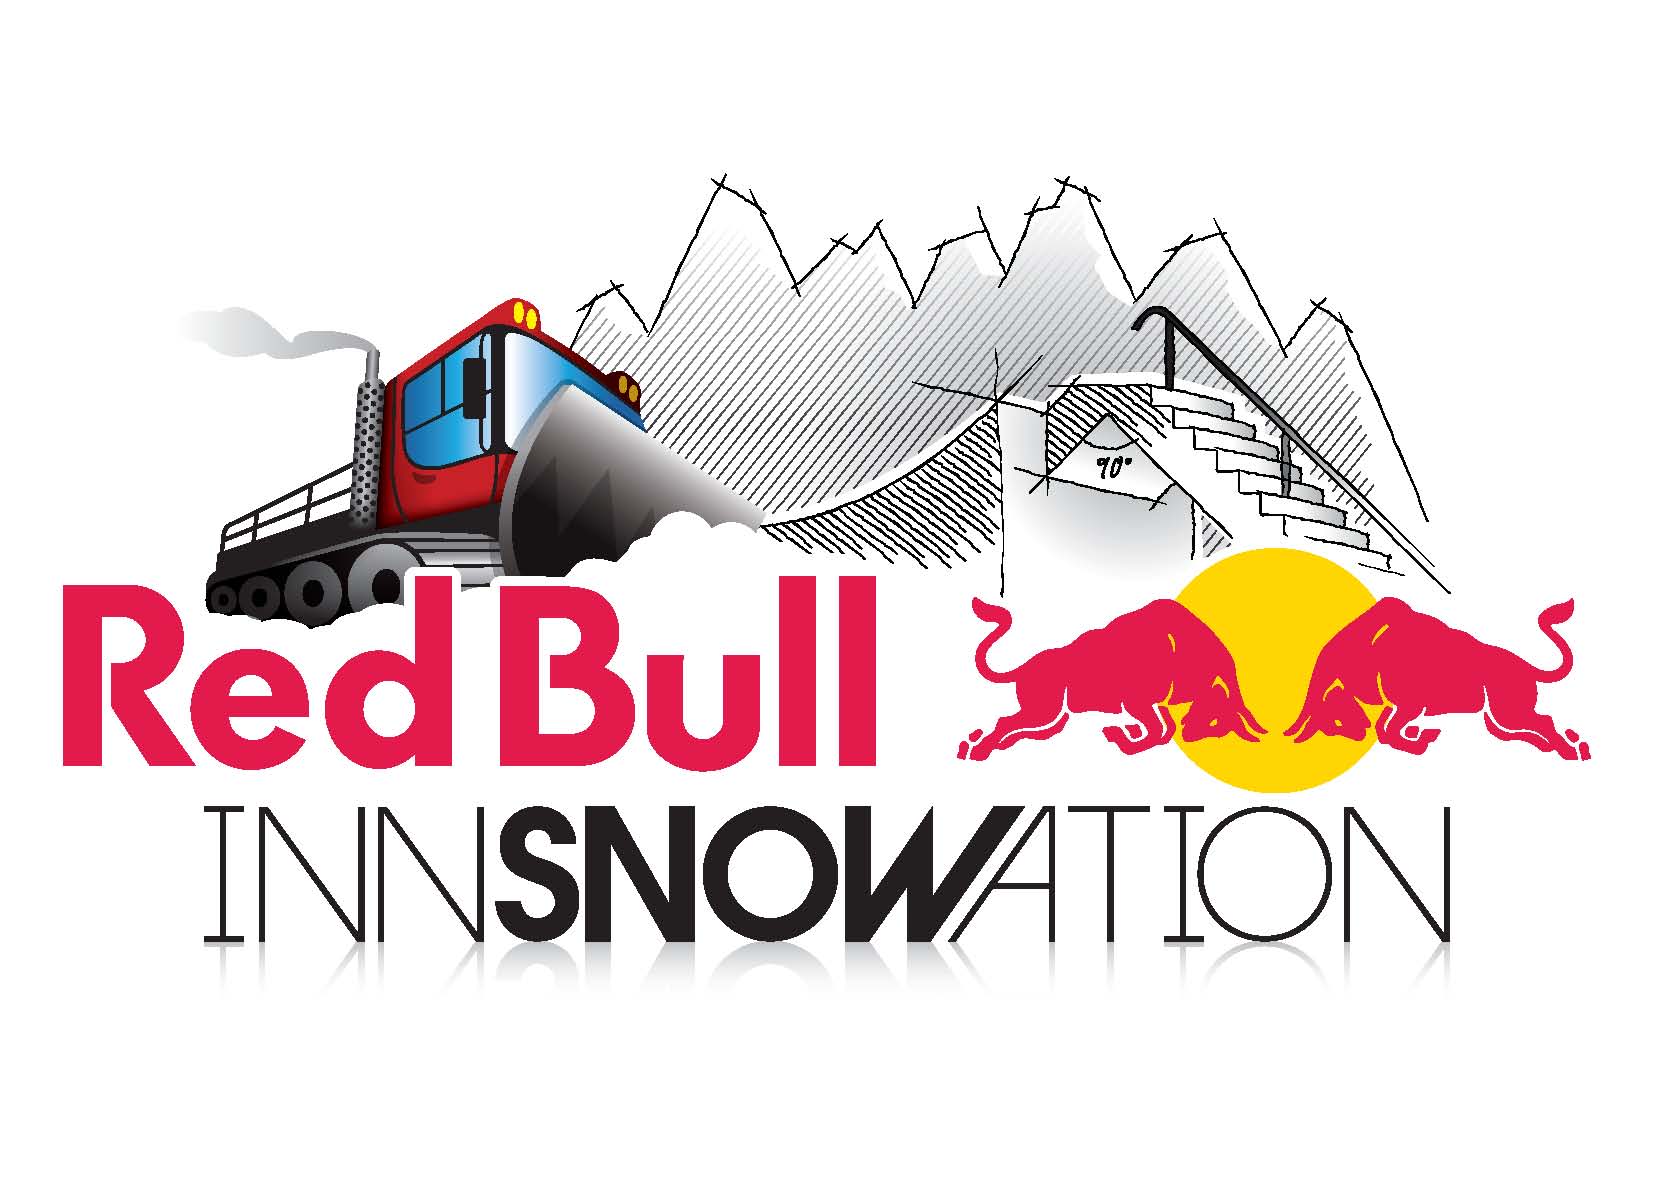 Red Bull Innsnowation – Scelti i tre snowpark finalisti!